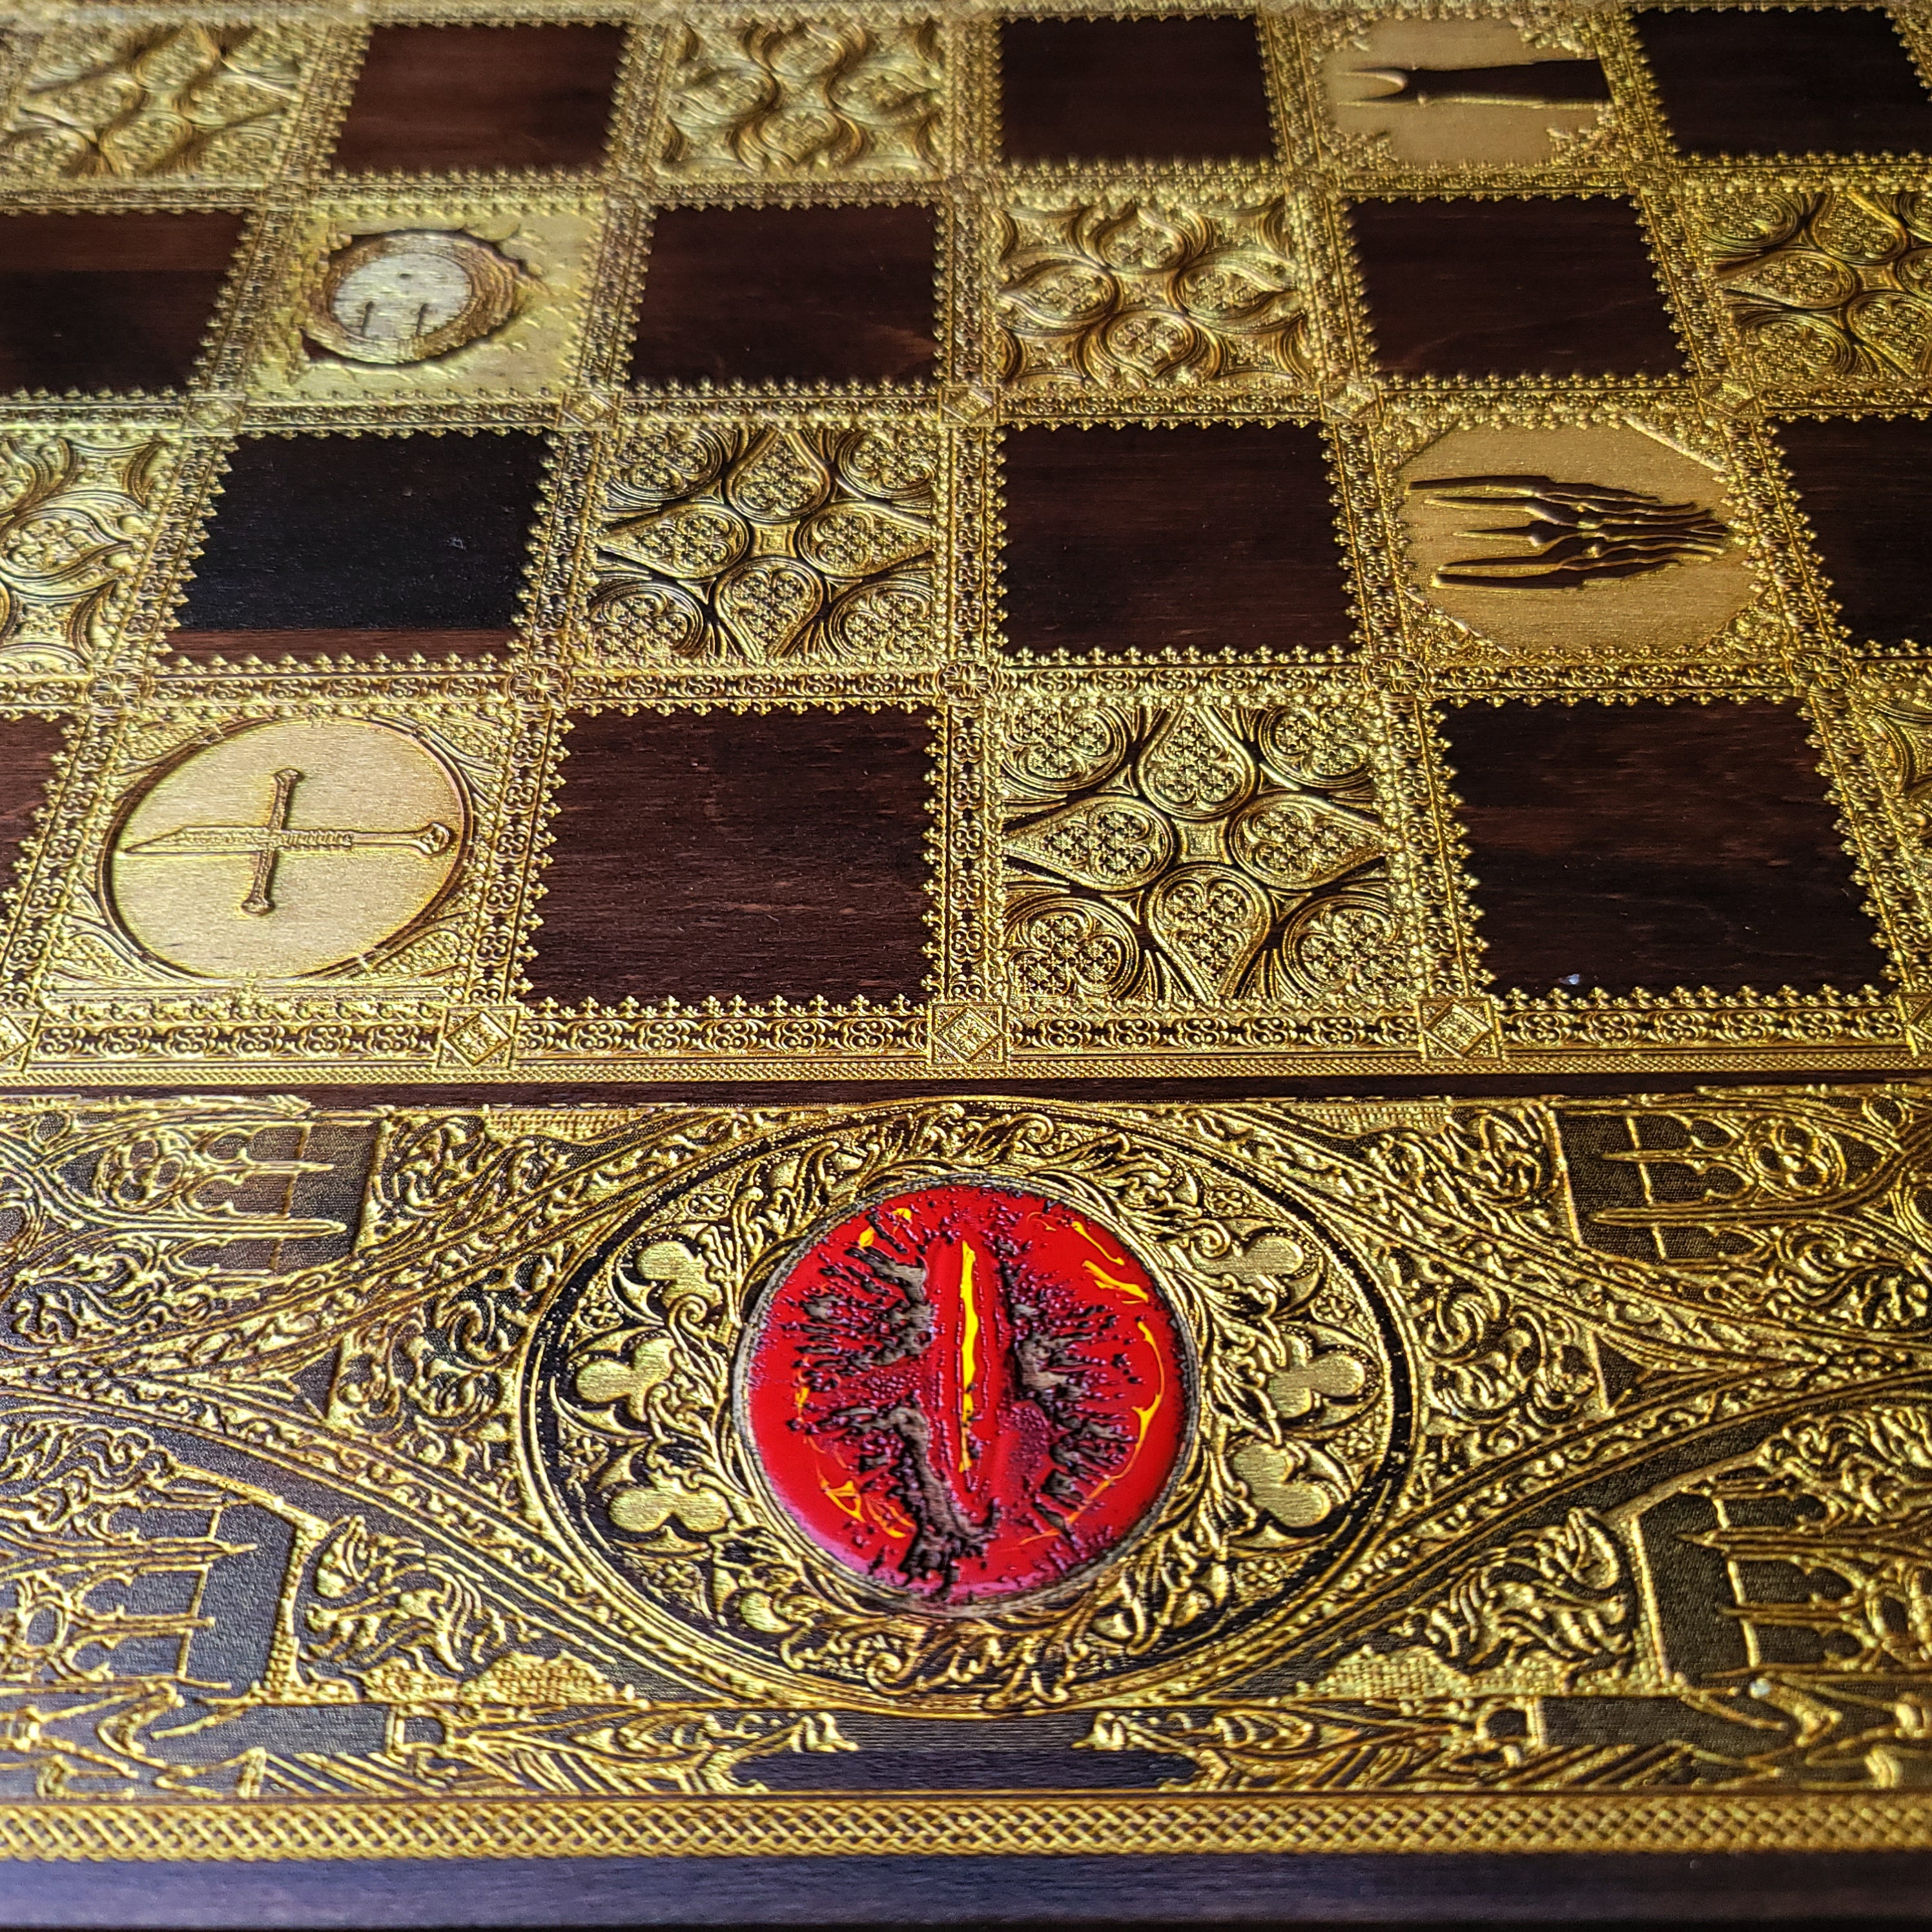 Fantasy Chess Board - Walnut & Gold - Tournament Size